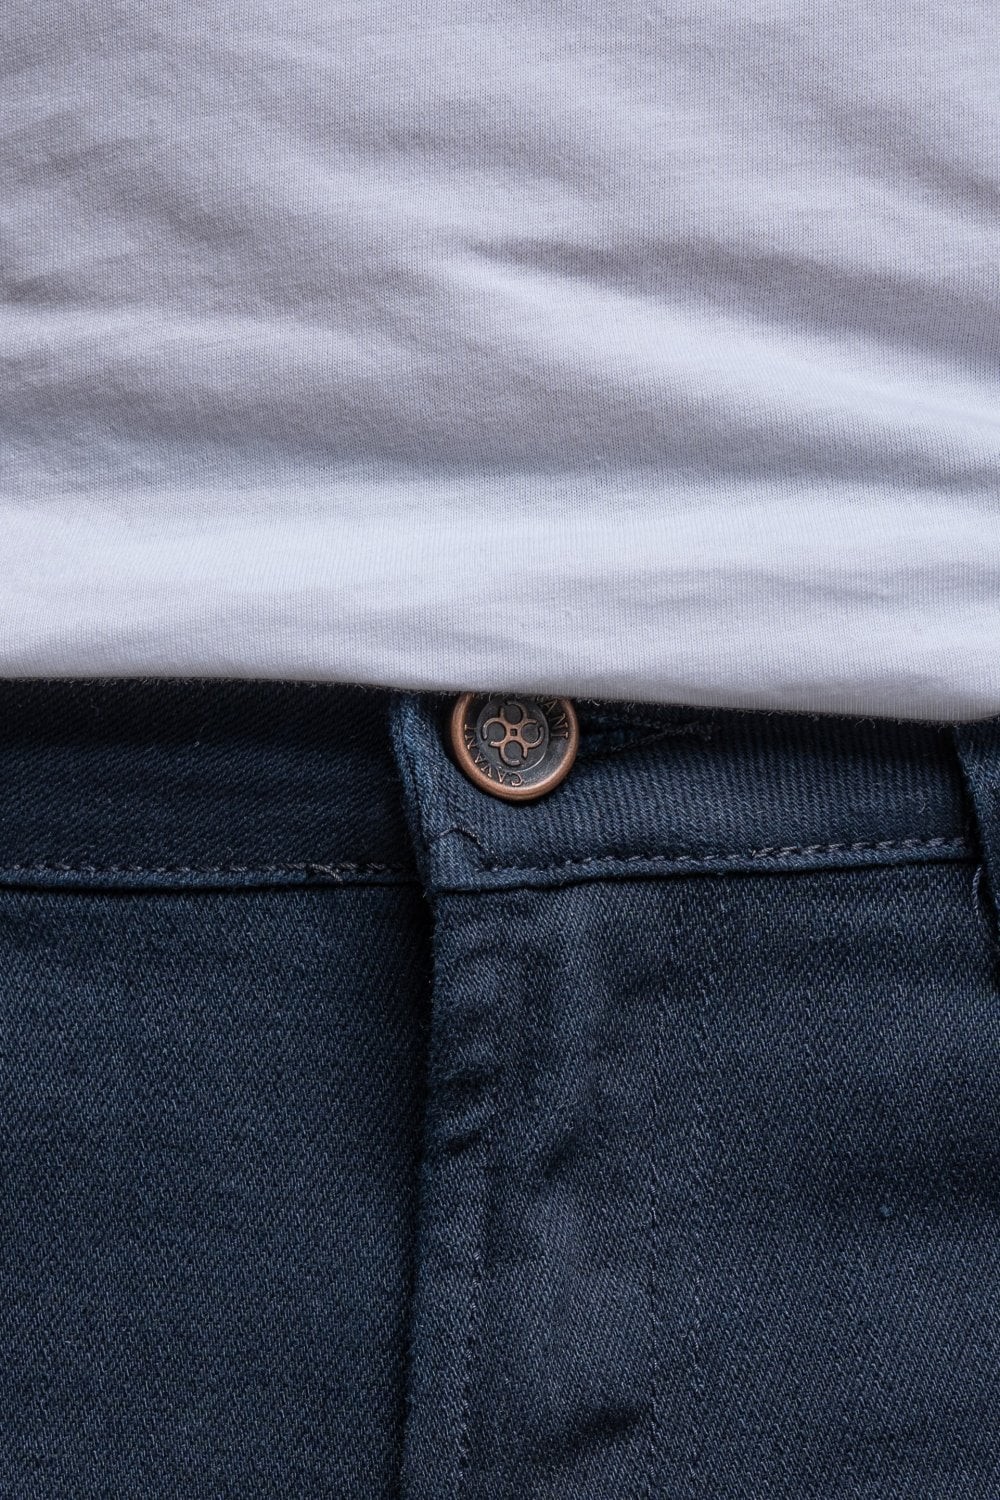 Men's Cotton Slim Fit Stretch Denim Jeans - MILANO - Steel Grey